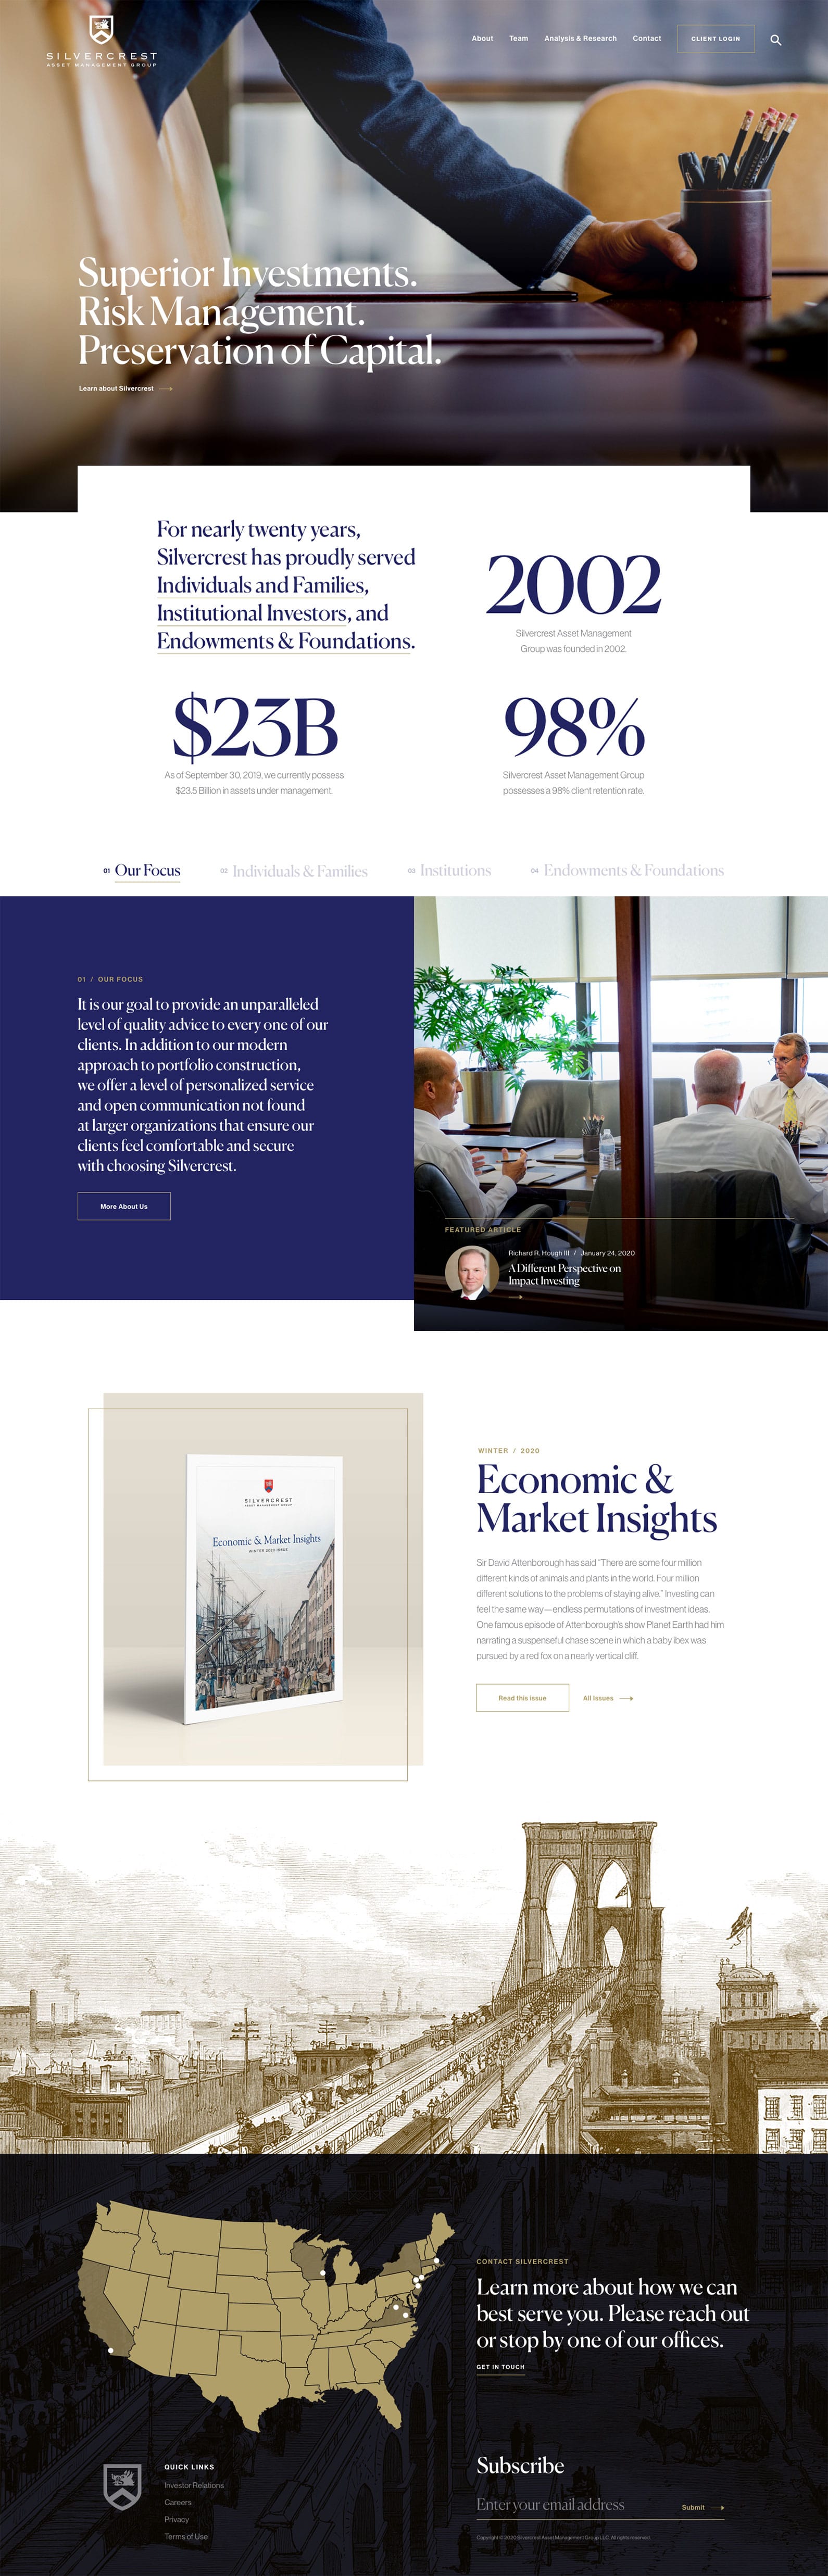 Financial services web design for Silvercrest Asset Management Group